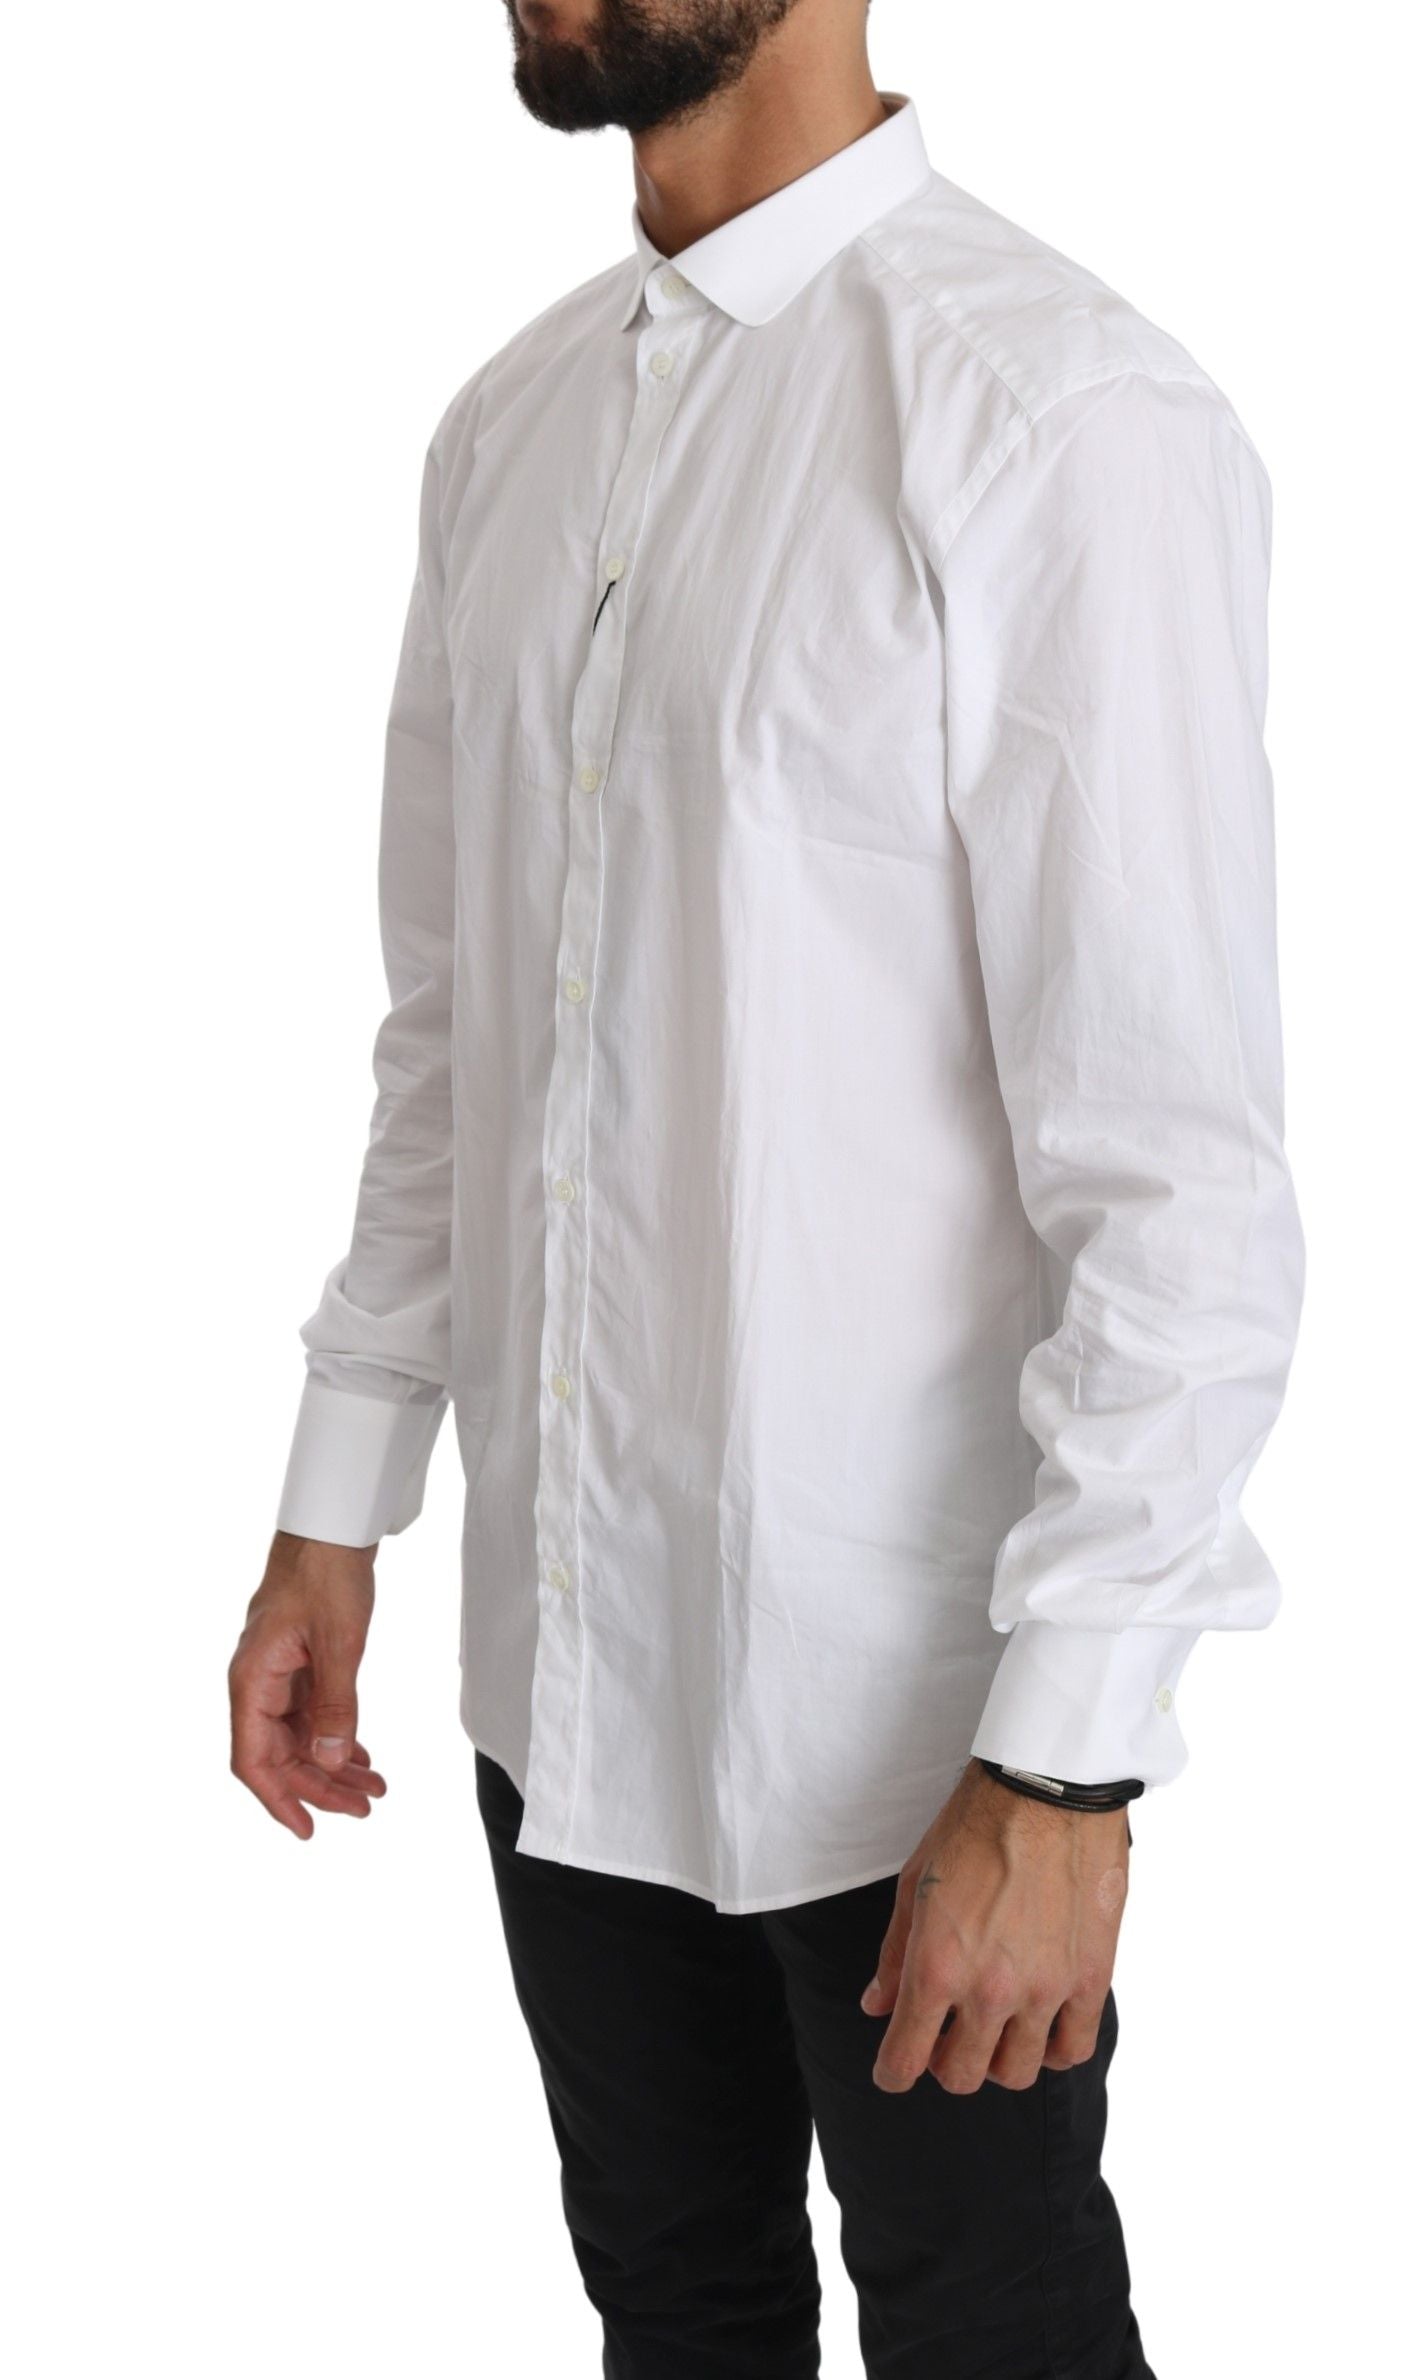 Dolce & Gabbana White Cotton Long Sleeve Top Shirt